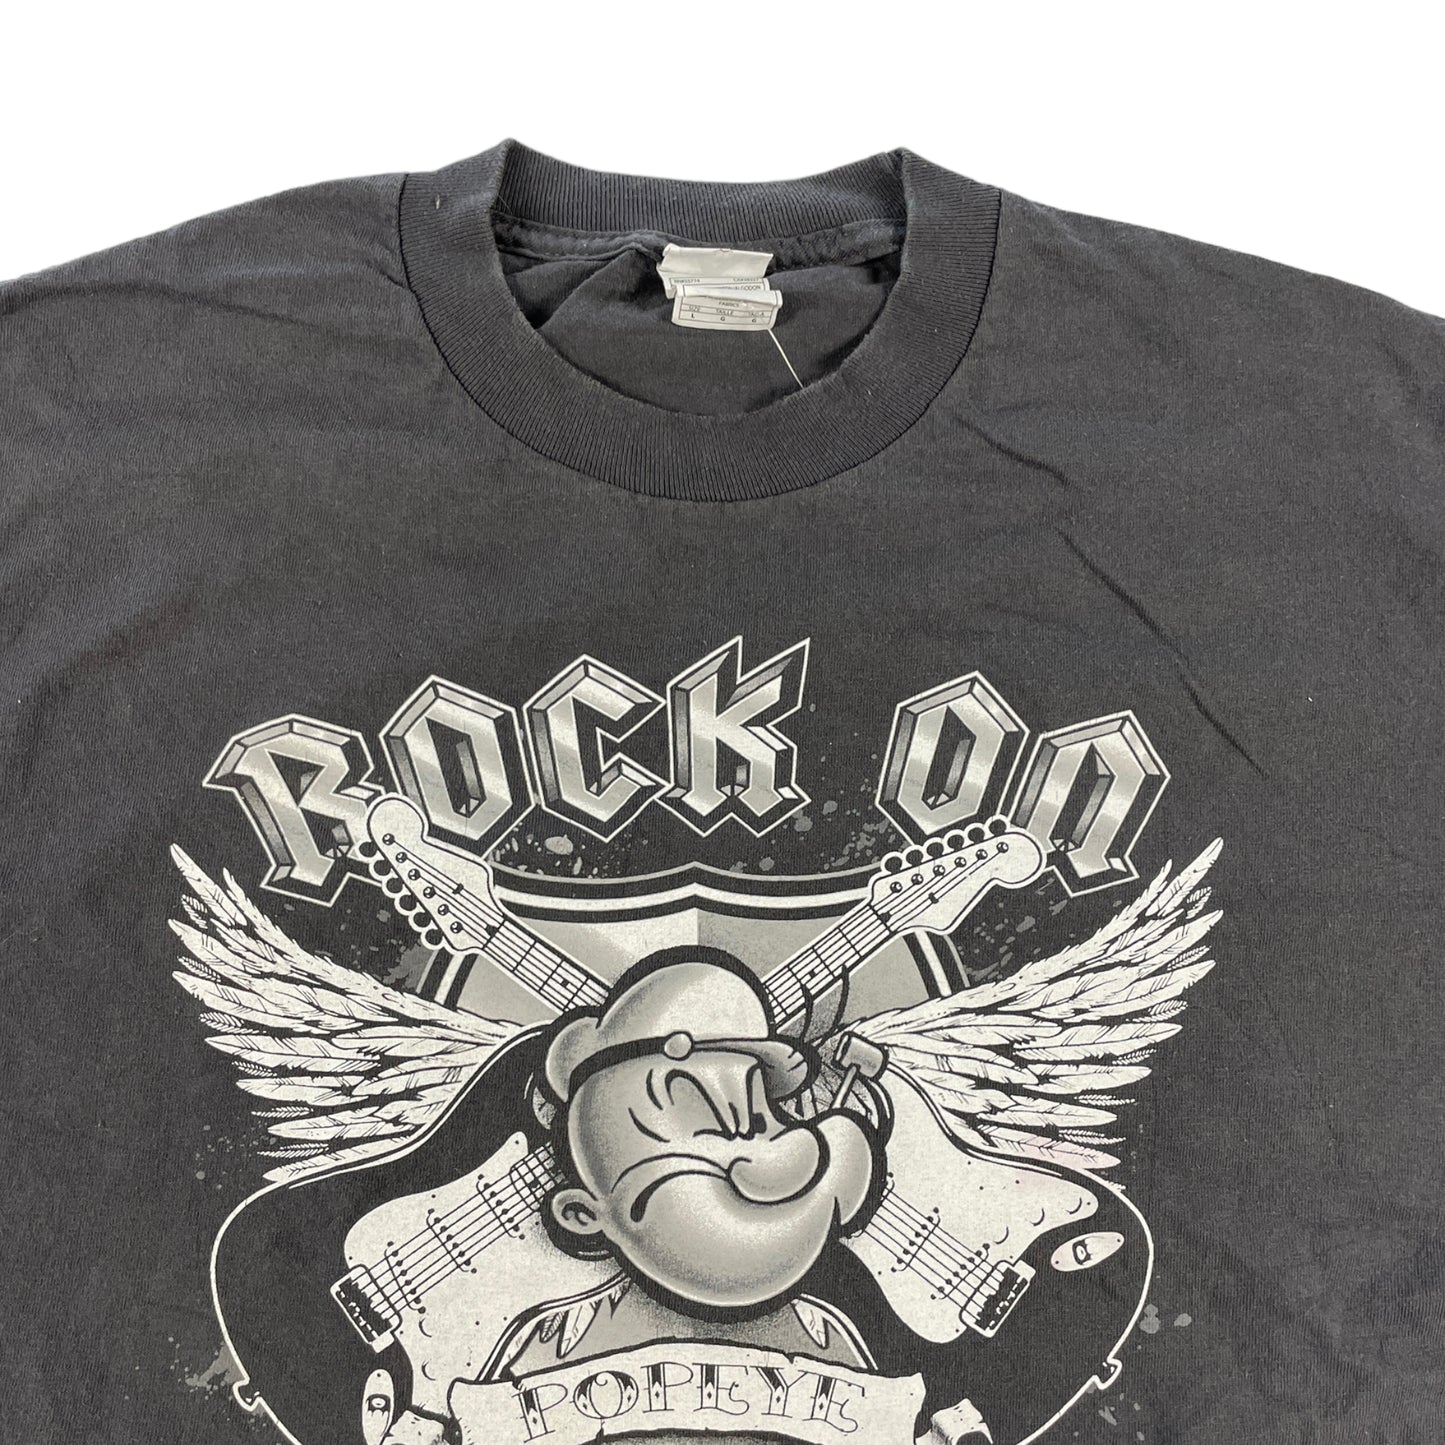 Rock On Popeye T-Shirt